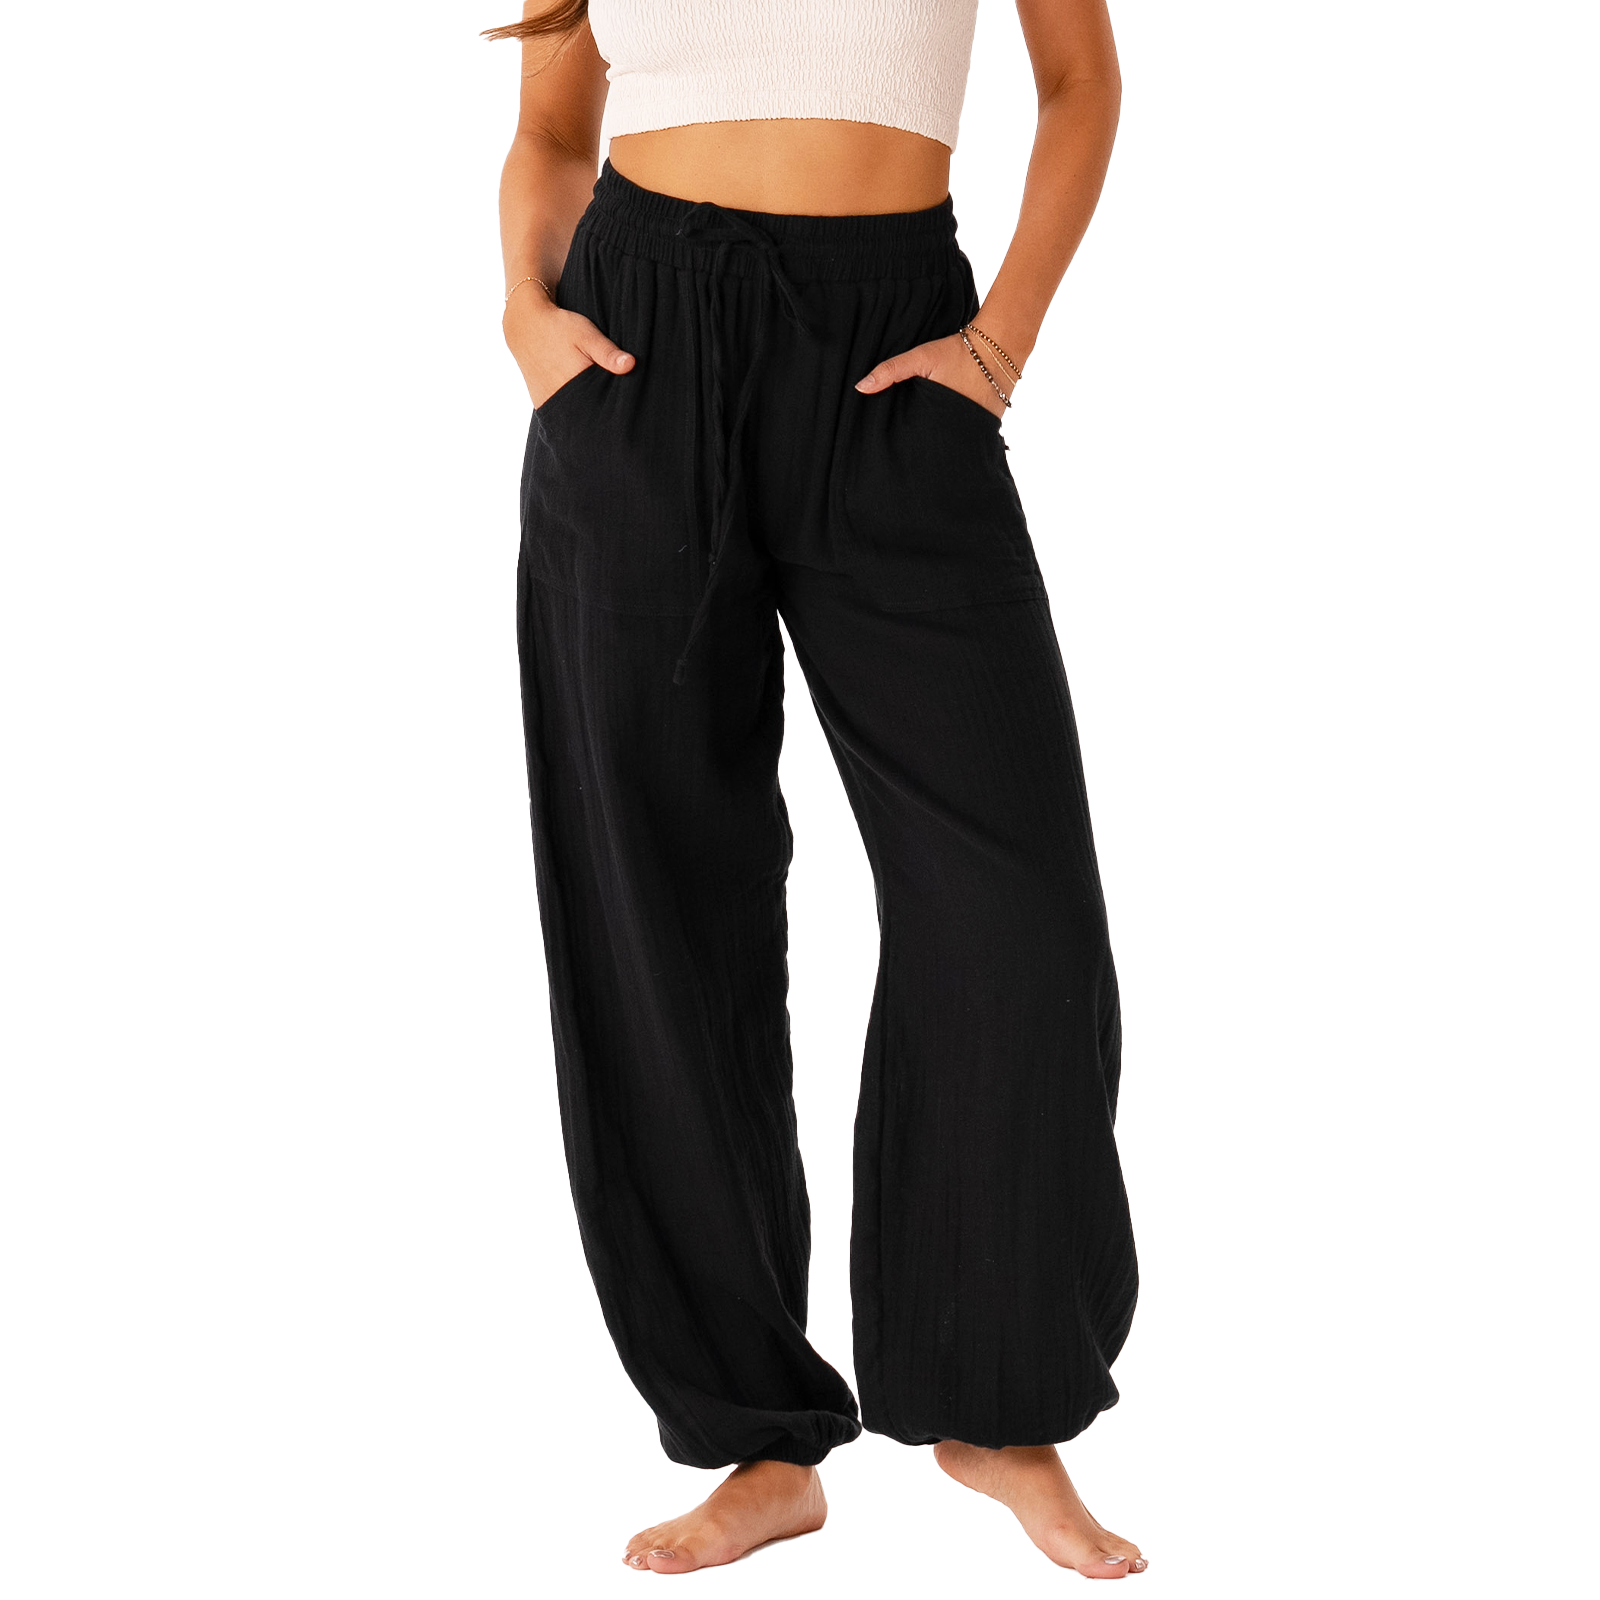 Model wearing black harem pants with a drawstring waistband